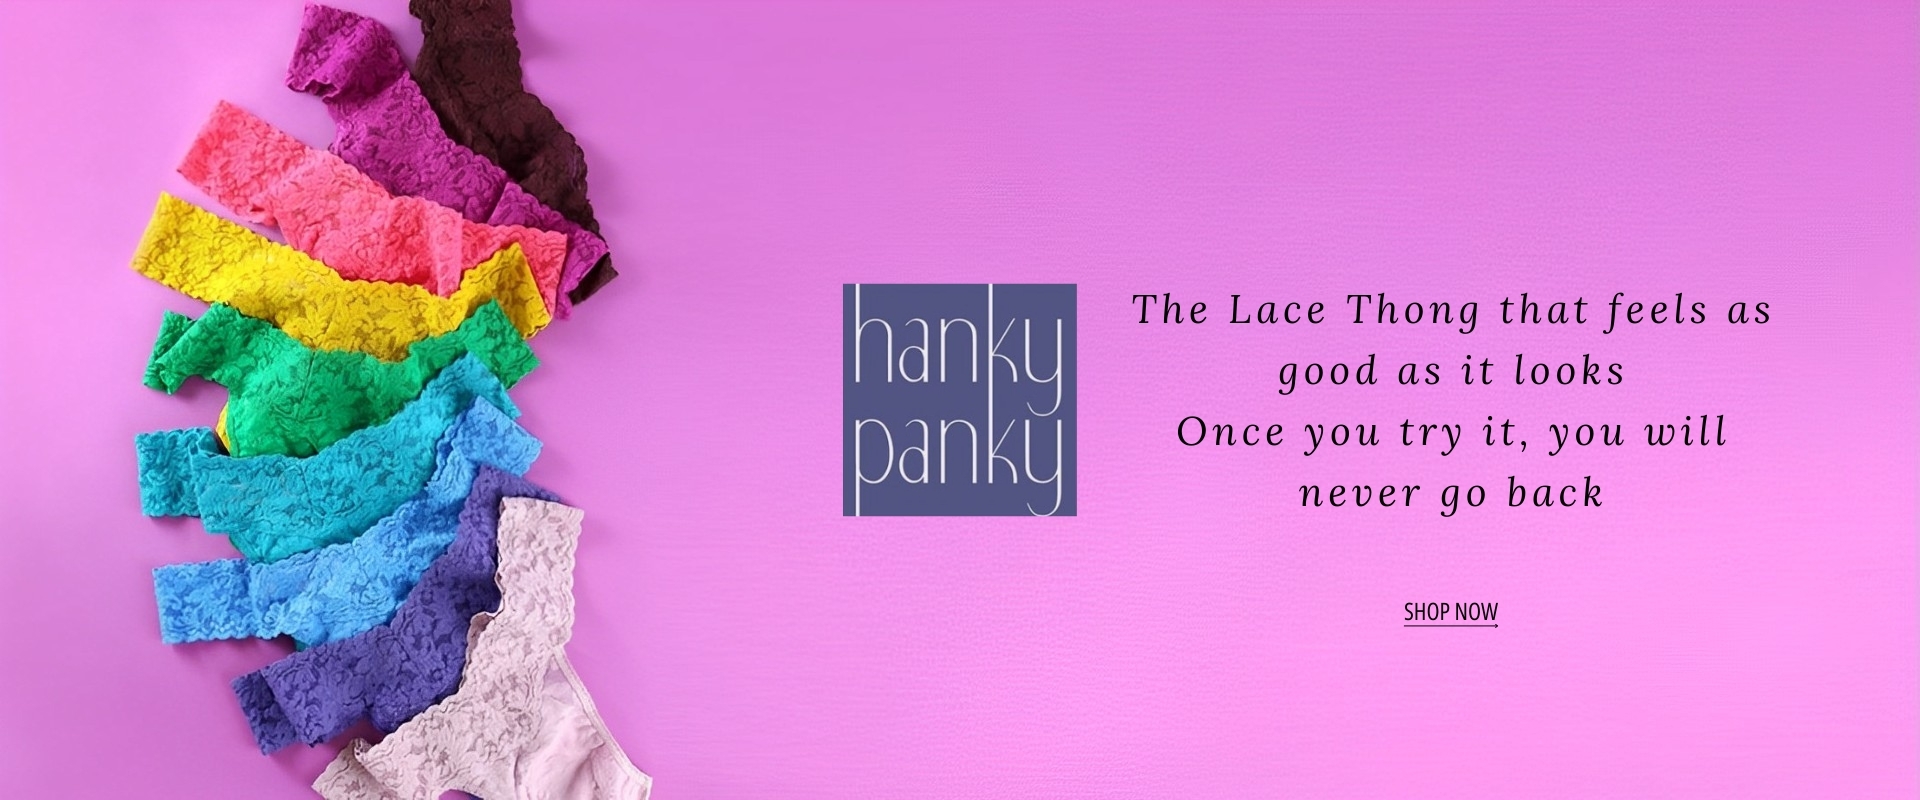 hanky panky lace thong promo header desktop